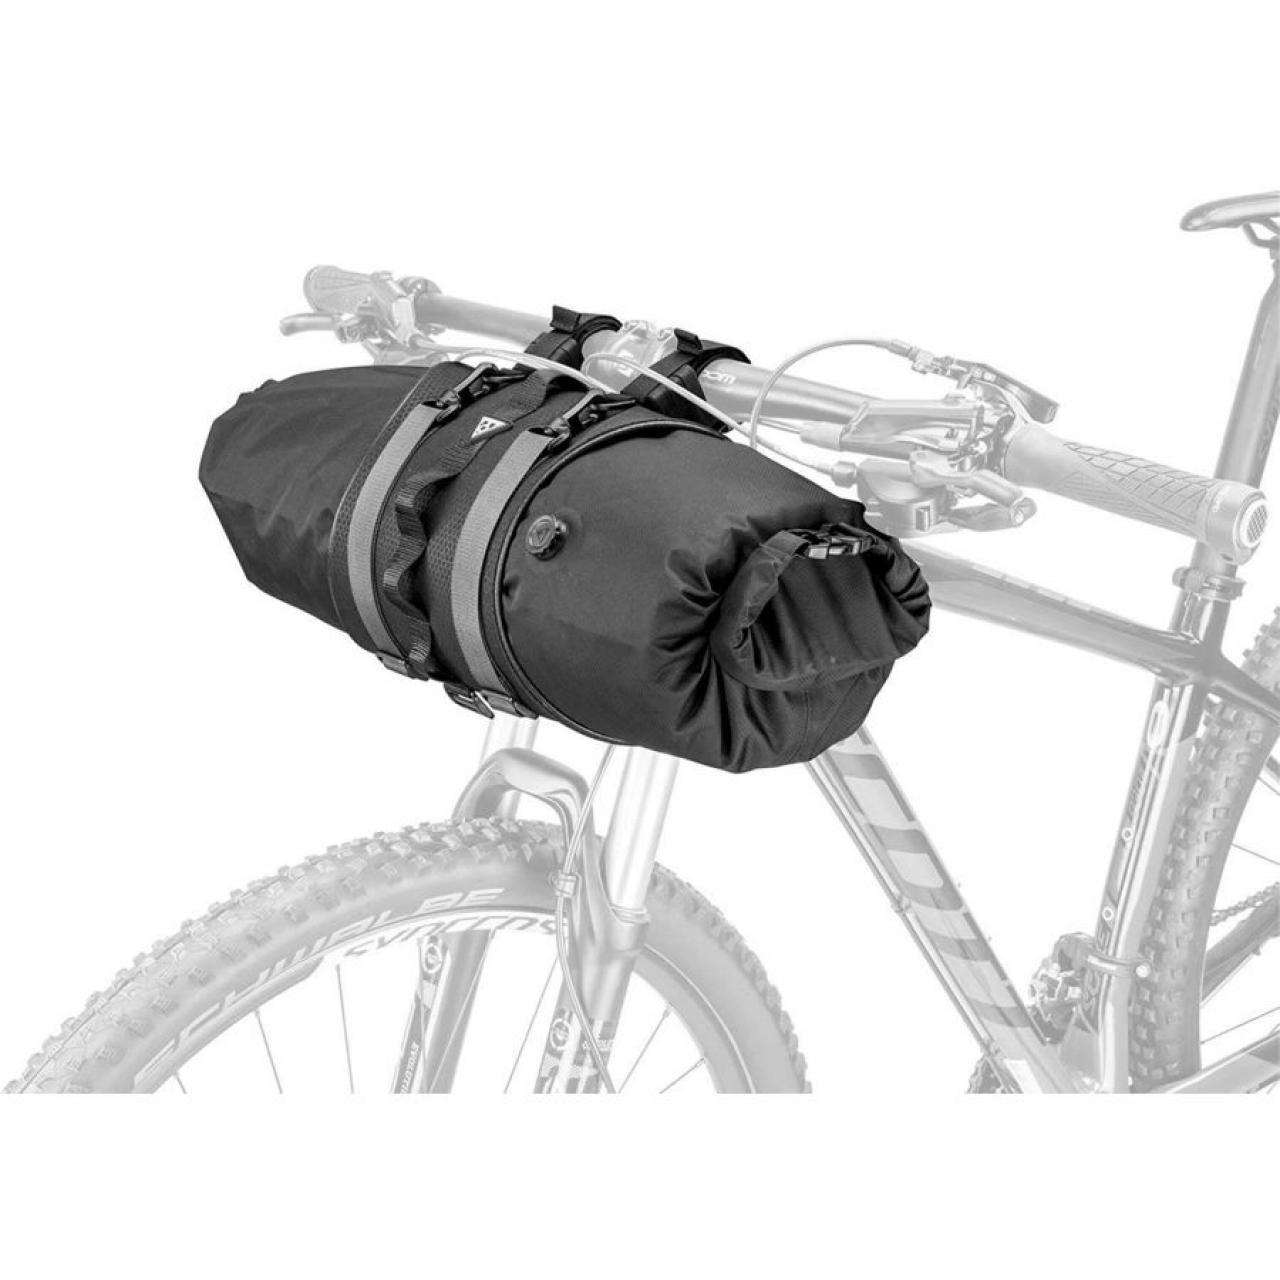 Support téléphone bikepacking : maintien extrême et étanchéité – Bikepackeur